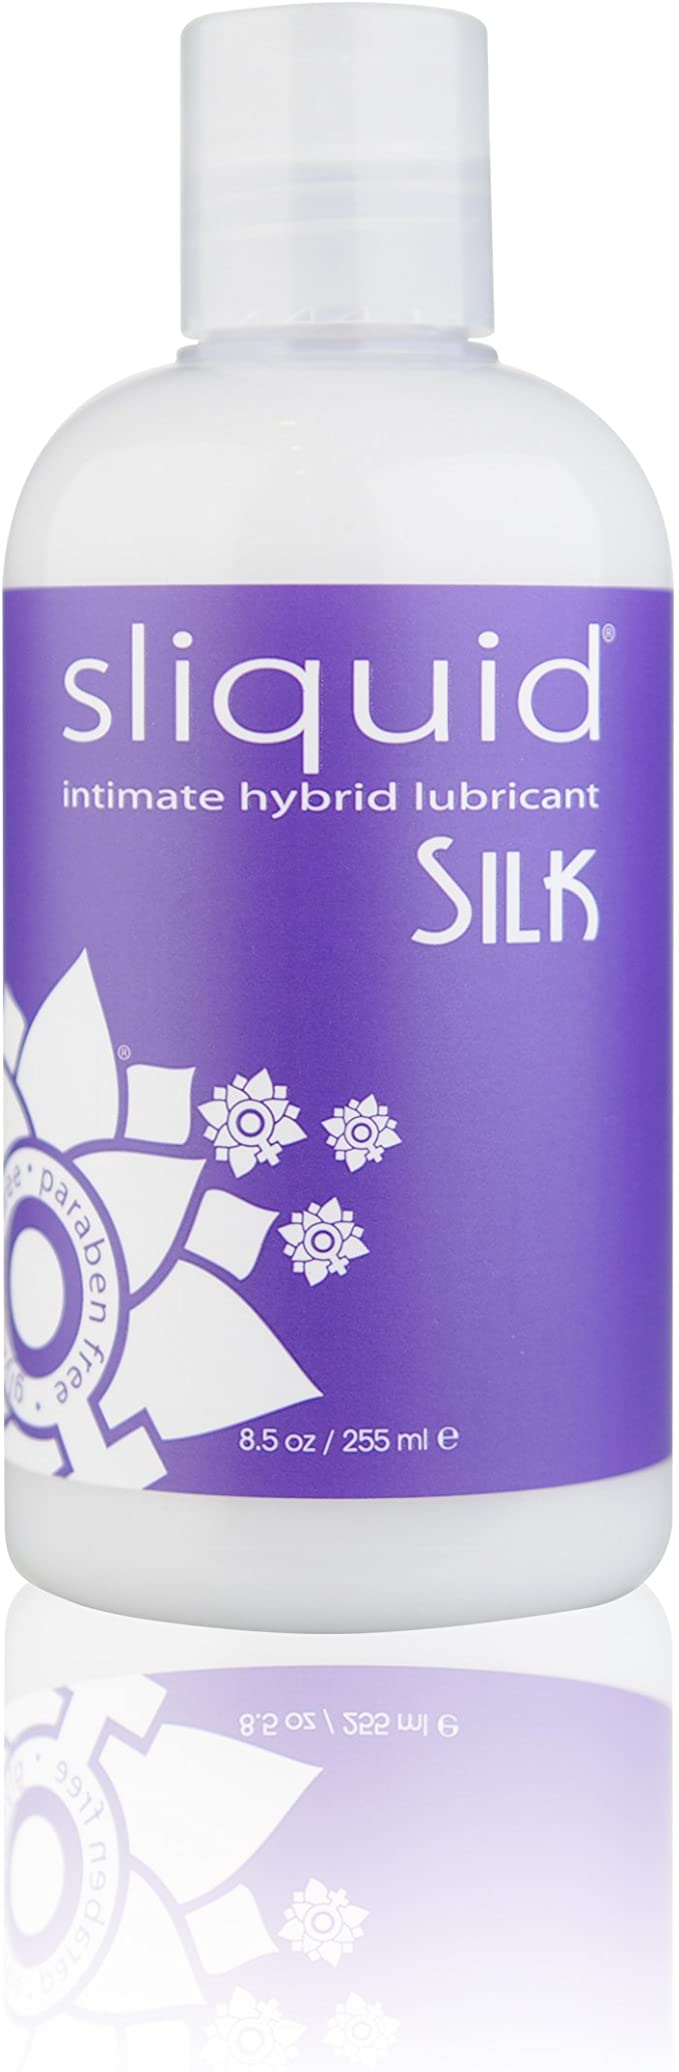 Sliquid Silk Hybrid Formula Intimate Lubricant 8.5 Oz